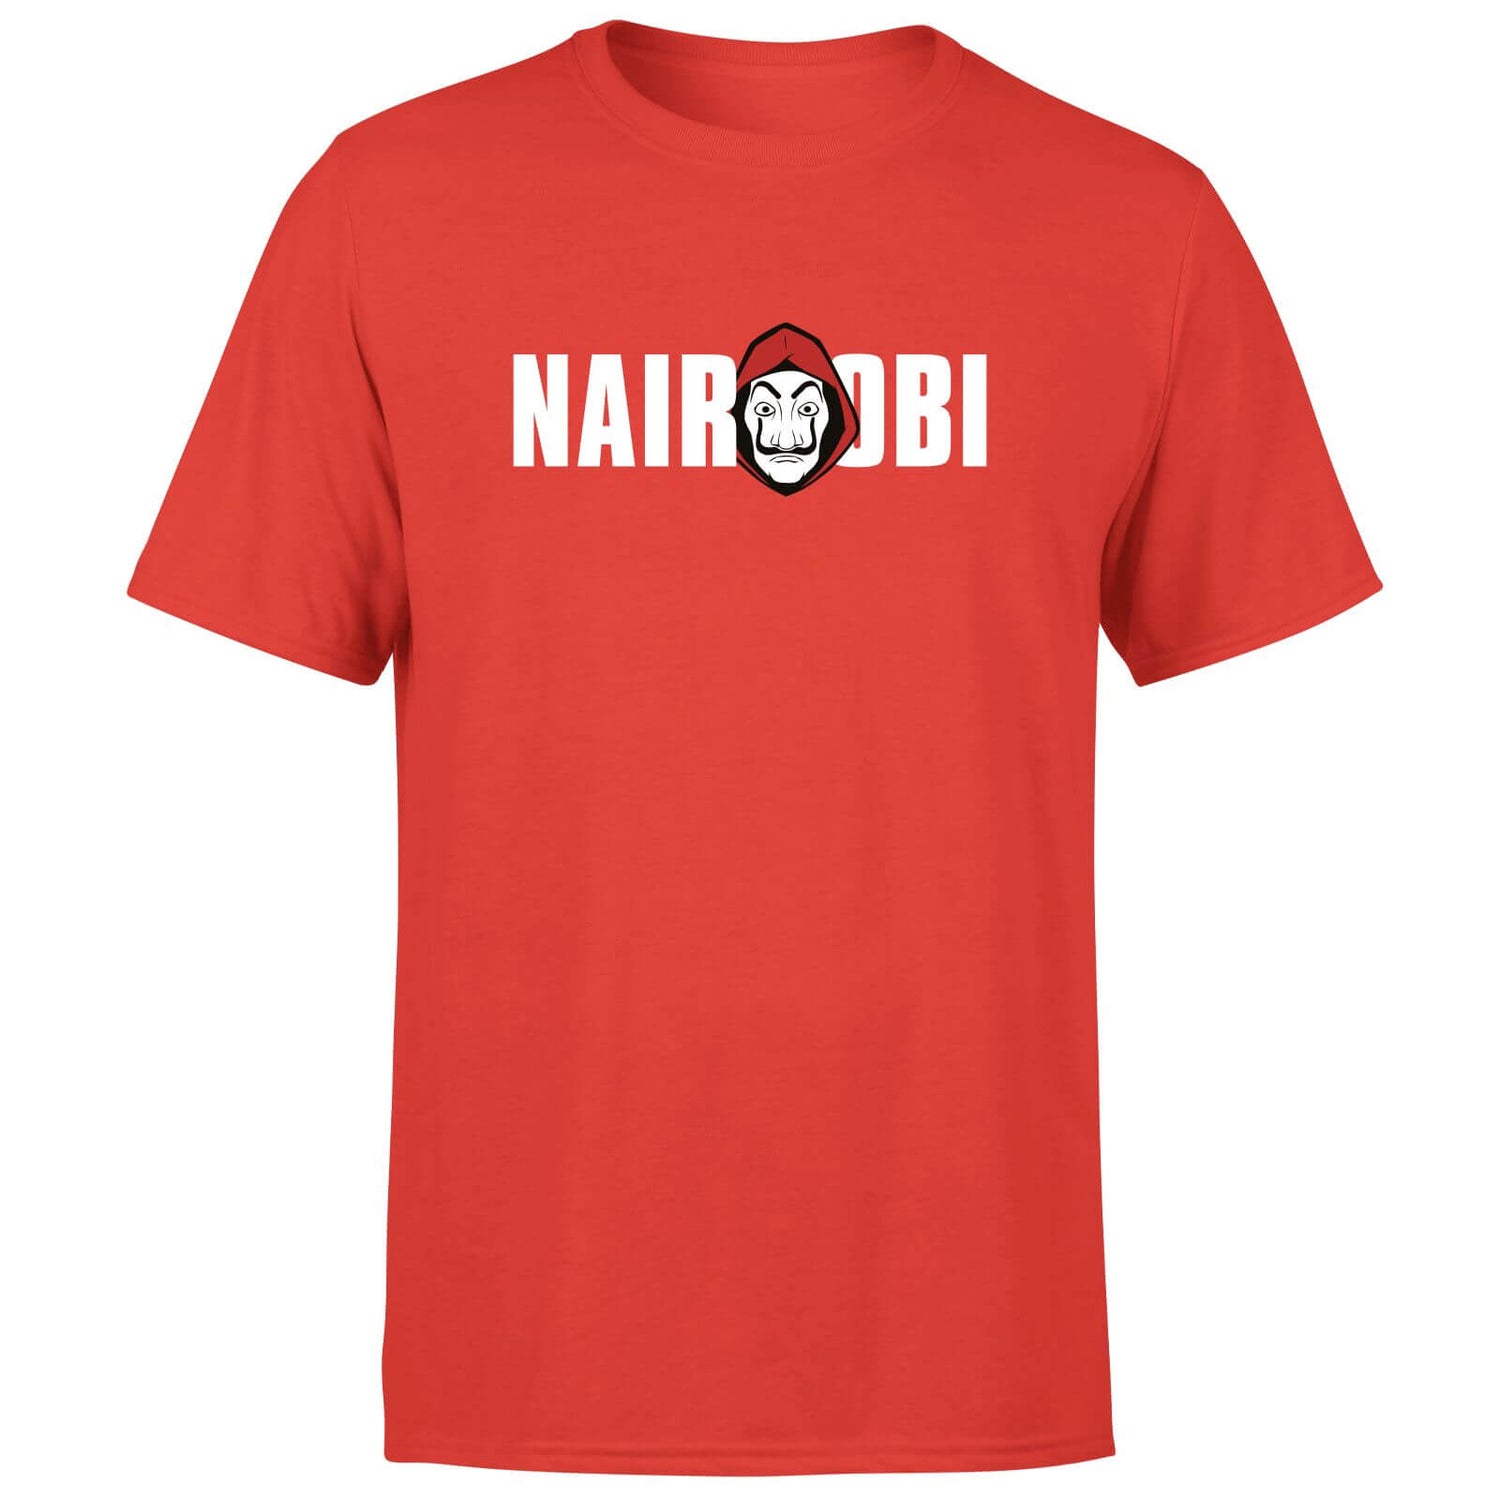 Camiseta de Nairobi de Money Heist - Hombre - Rojo